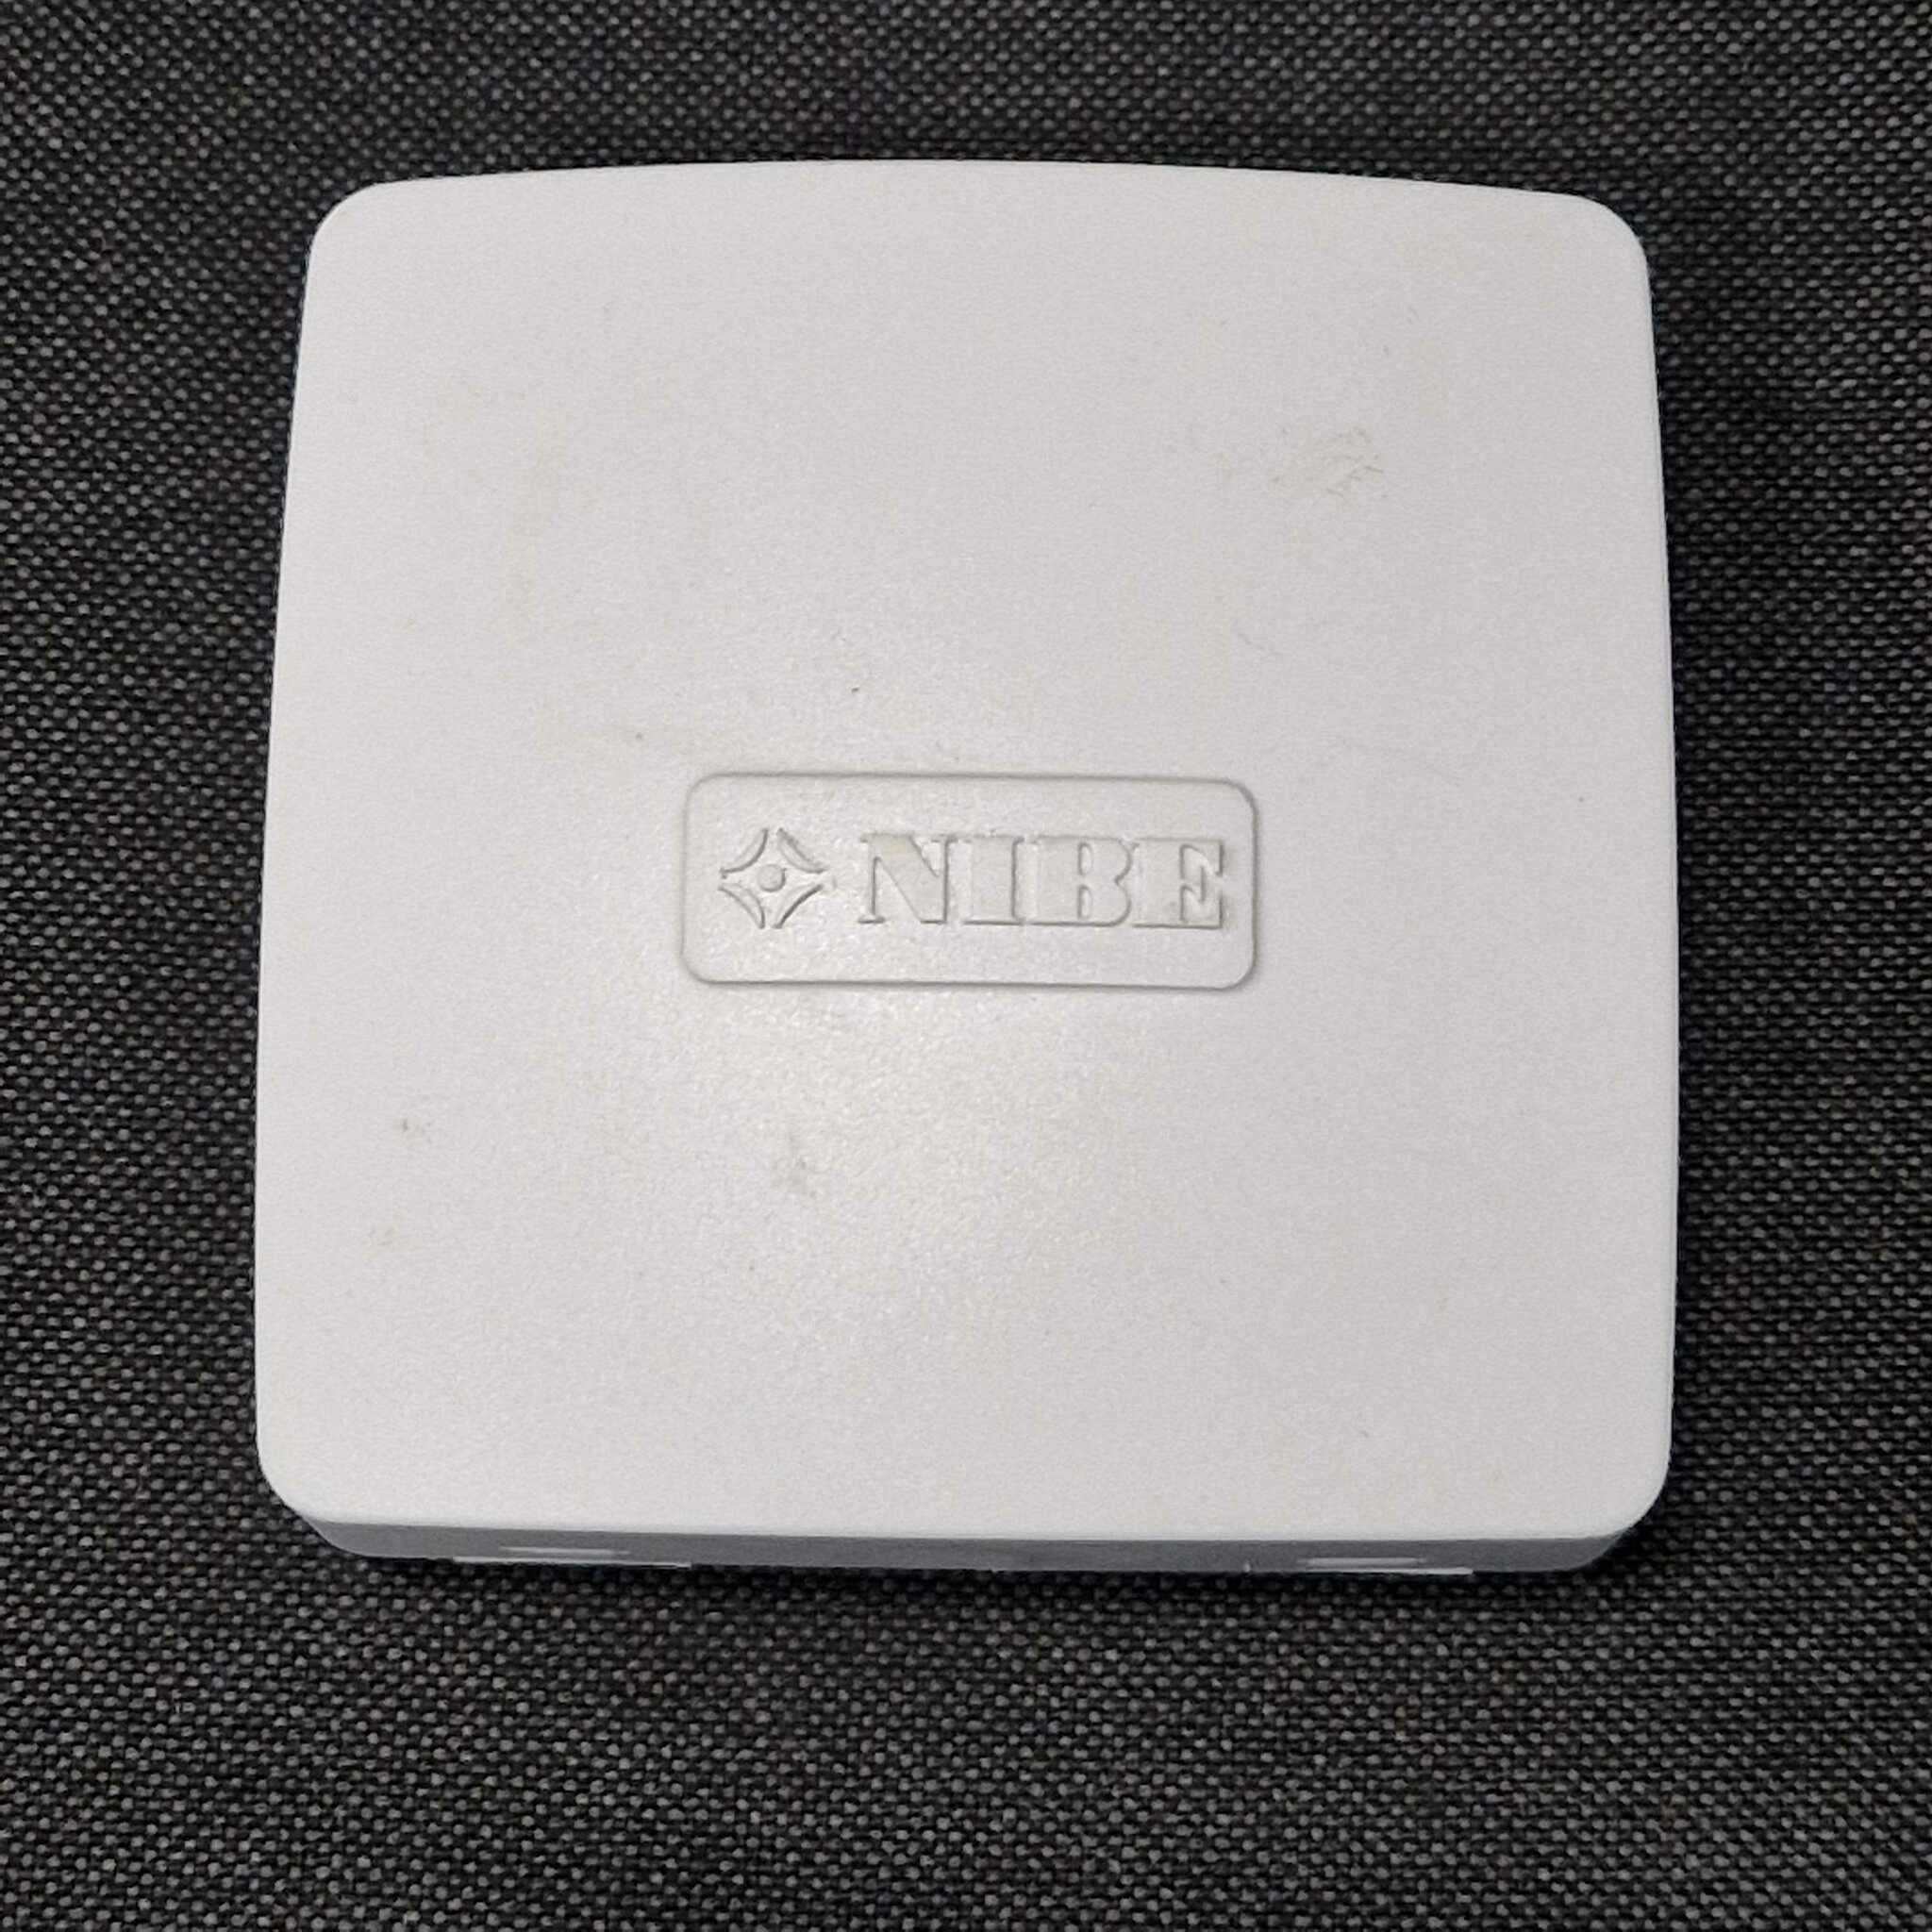 Nibe Room Sensor Part no. 318828 - Refurbished & Tested